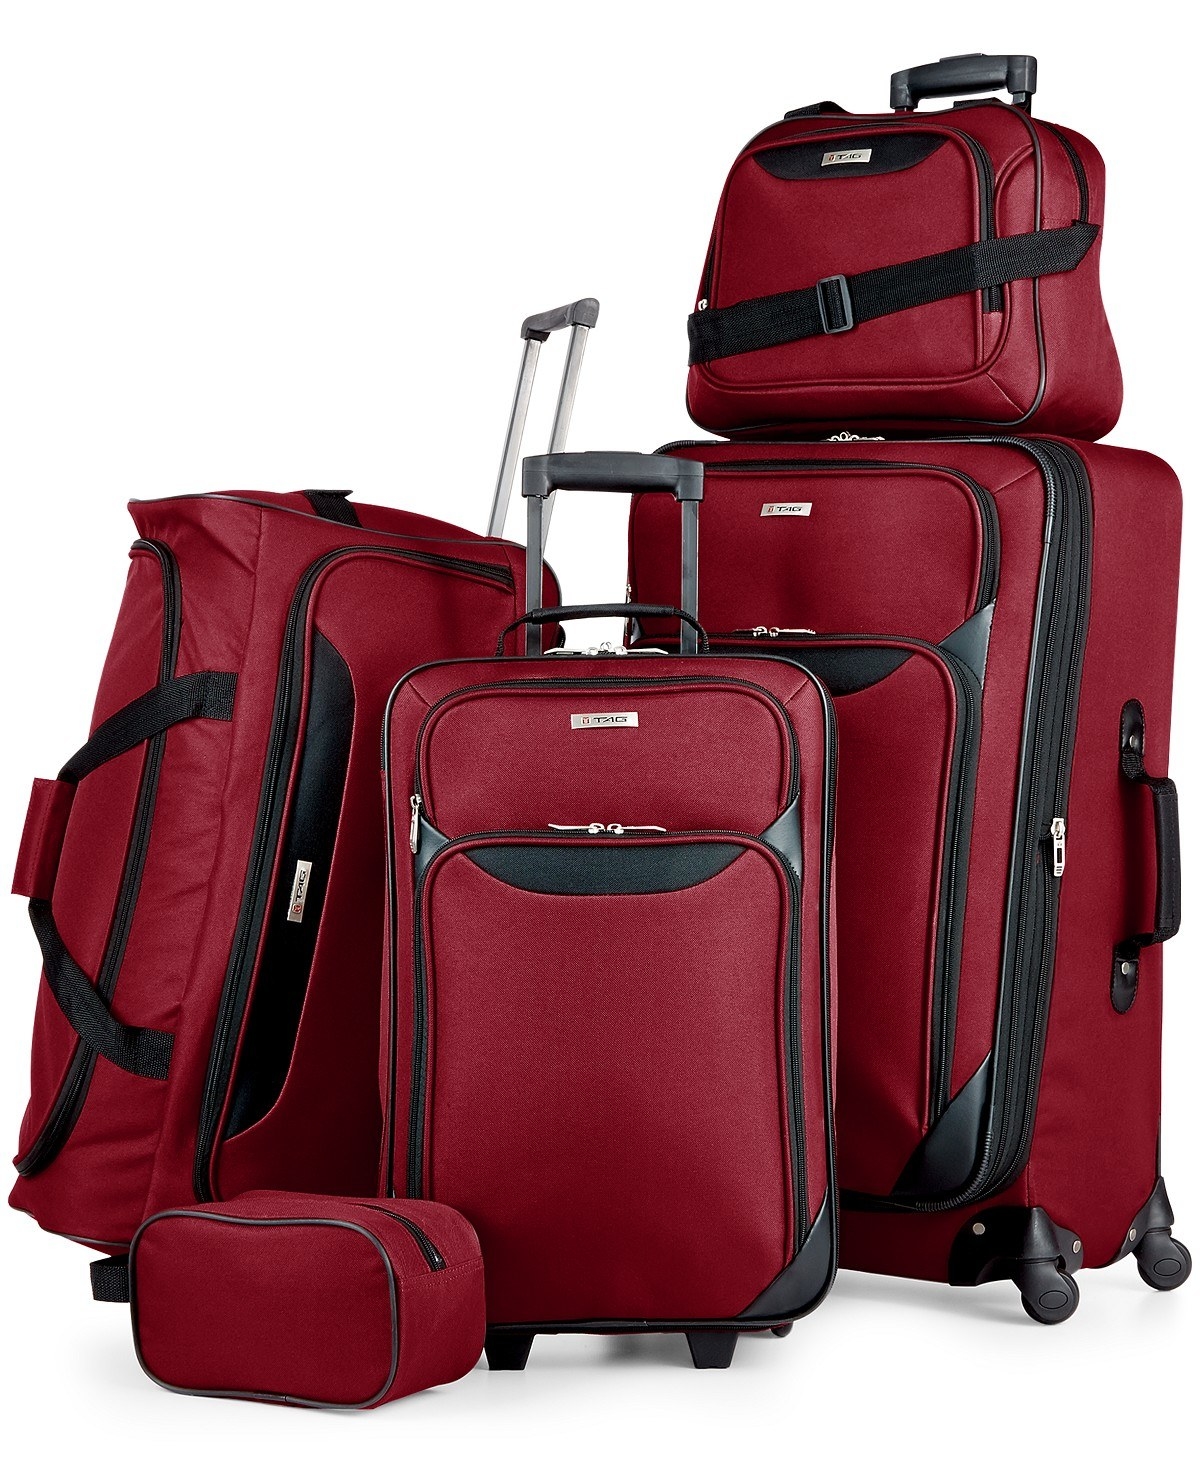 Большой сумка чемодан. Сумка чемодан. Дорожный чемодан. Чемодан для путешествий. Чемоданы и дорожные сумки.